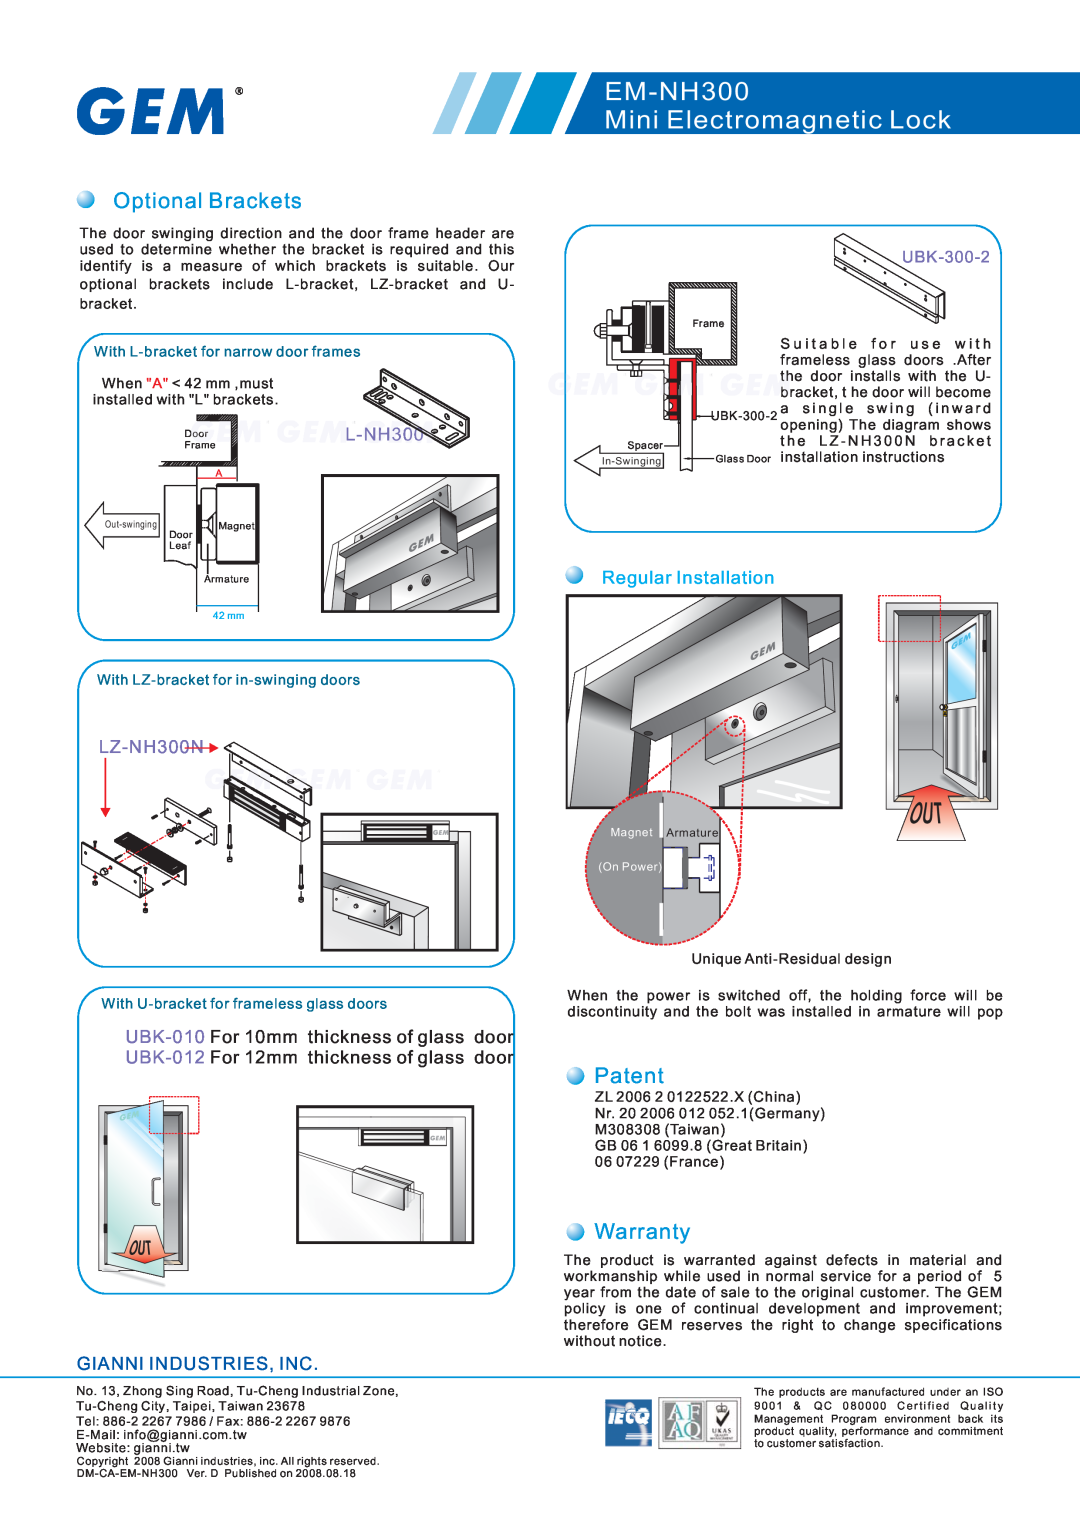 Gianni Industries Optional Brackets, Patent, Warranty, EM-NH300 Mini Electromagnetic Lock, L-NH300, LZ-NH300N 